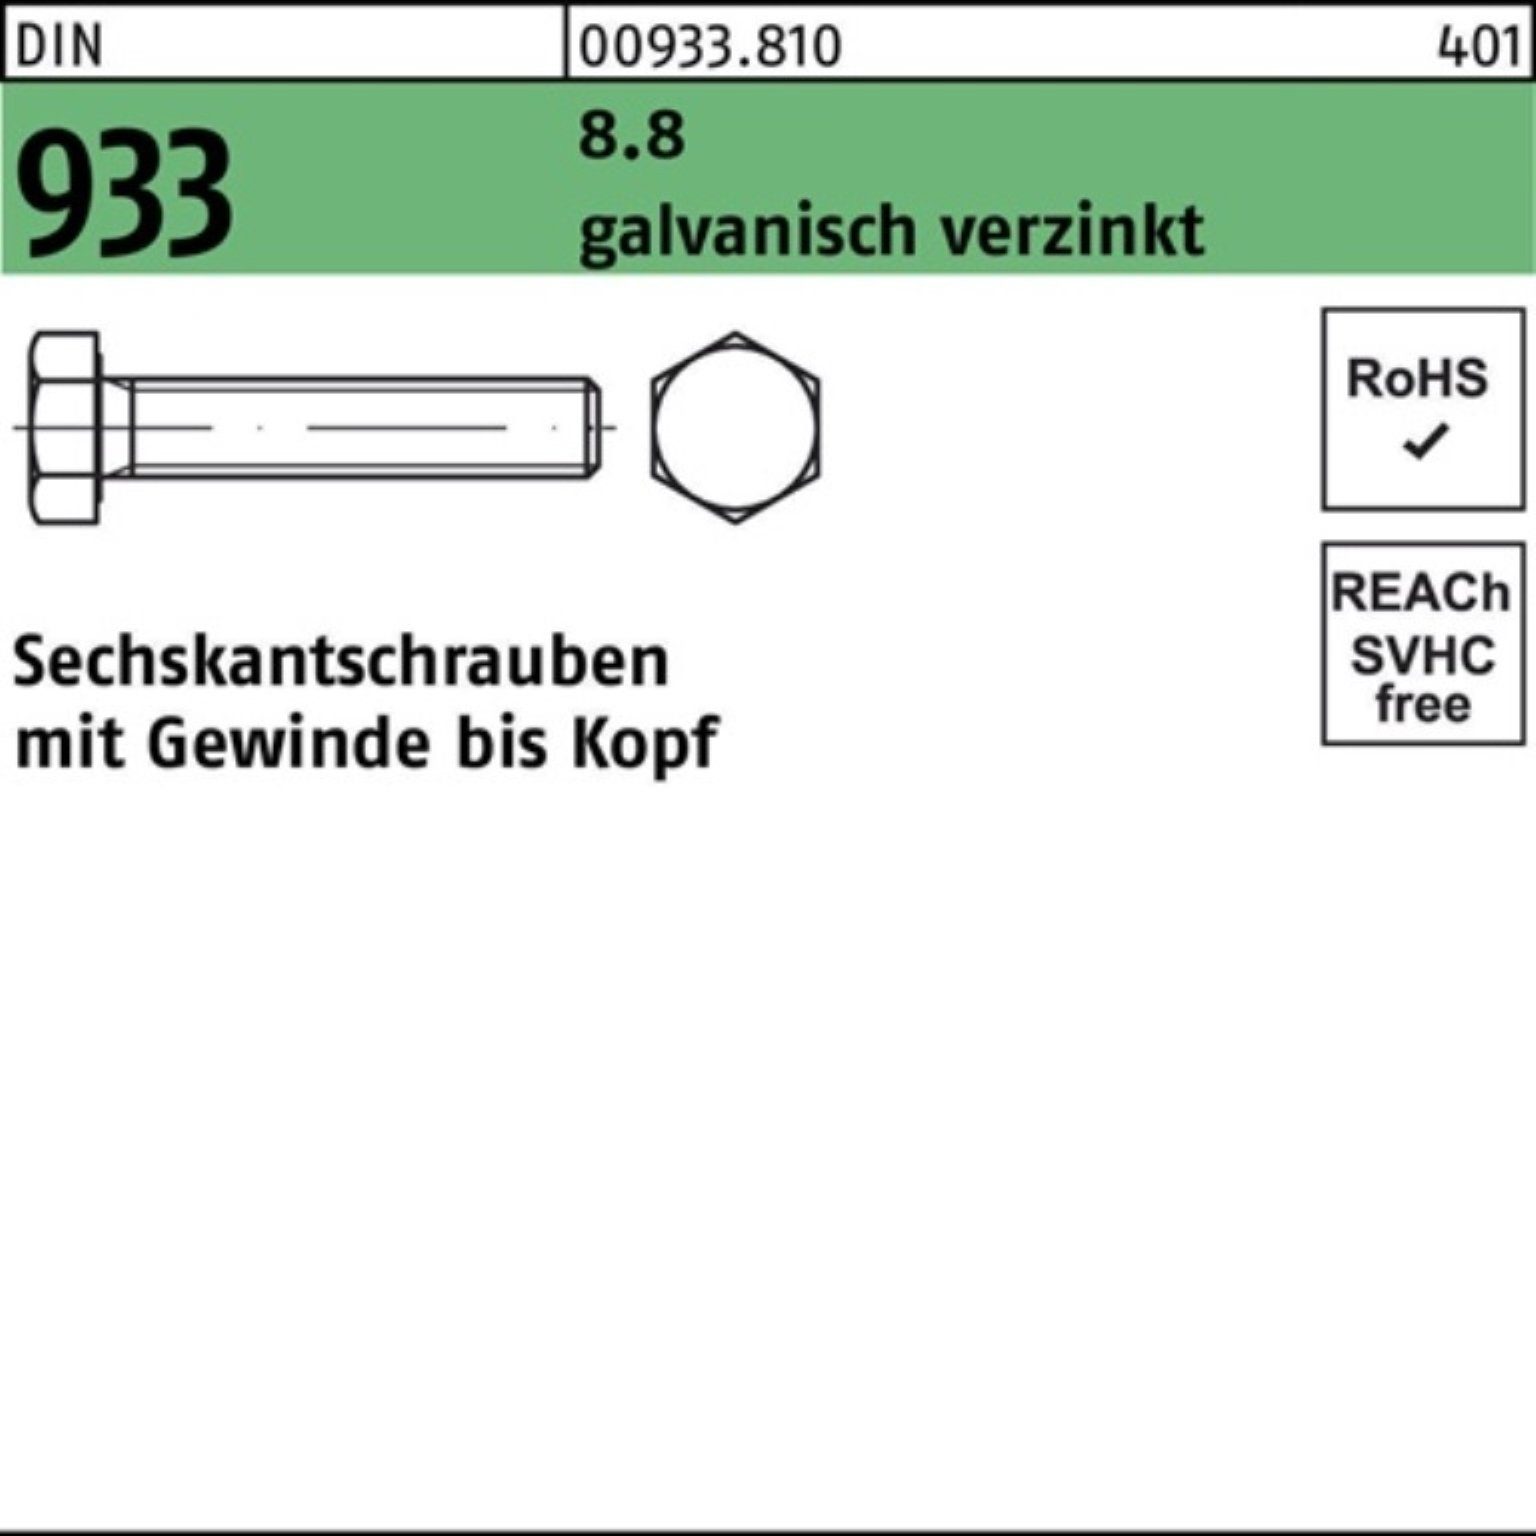 Sechskantschraube DIN M30x Sechskantschraube Pack VG galv.verz. Reyher Stüc 933 1 65 100er 8.8